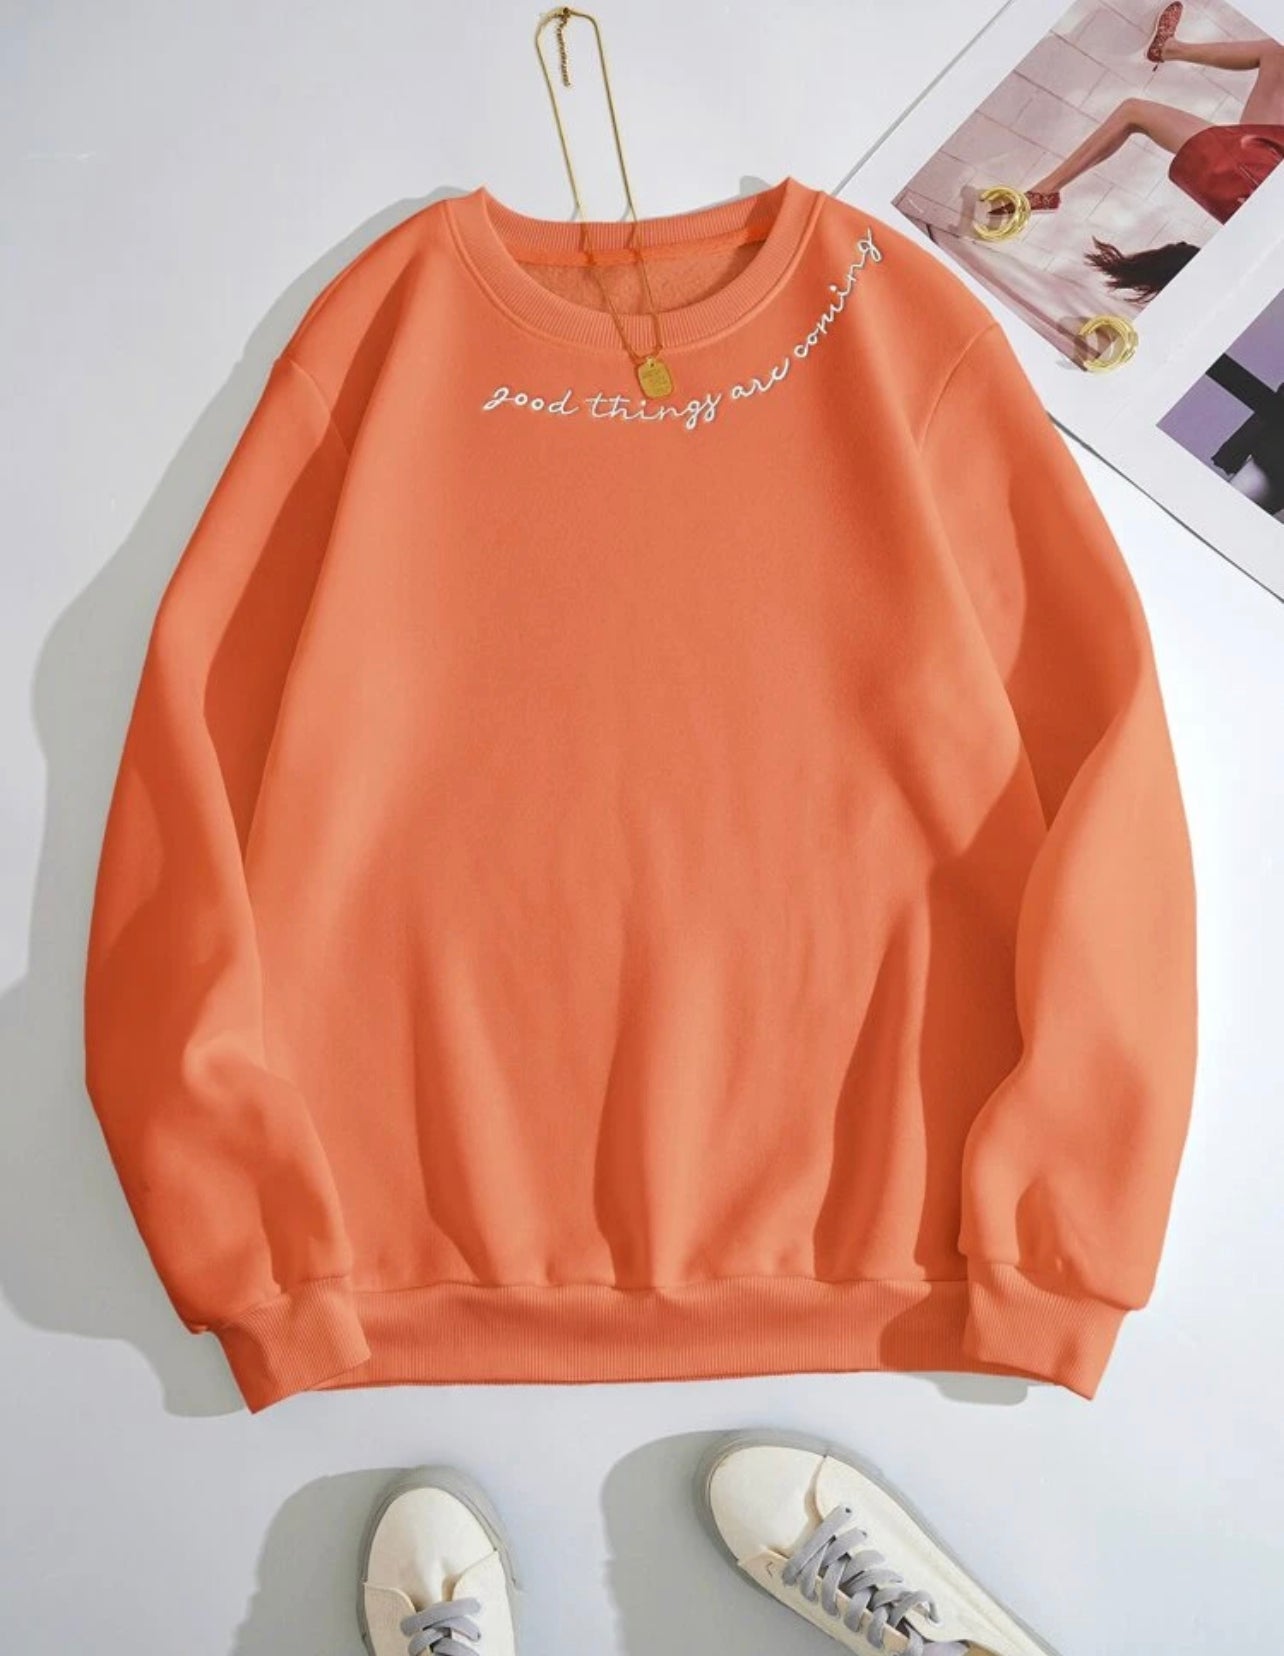 Good Things are Coming, Orange Sweatshirt